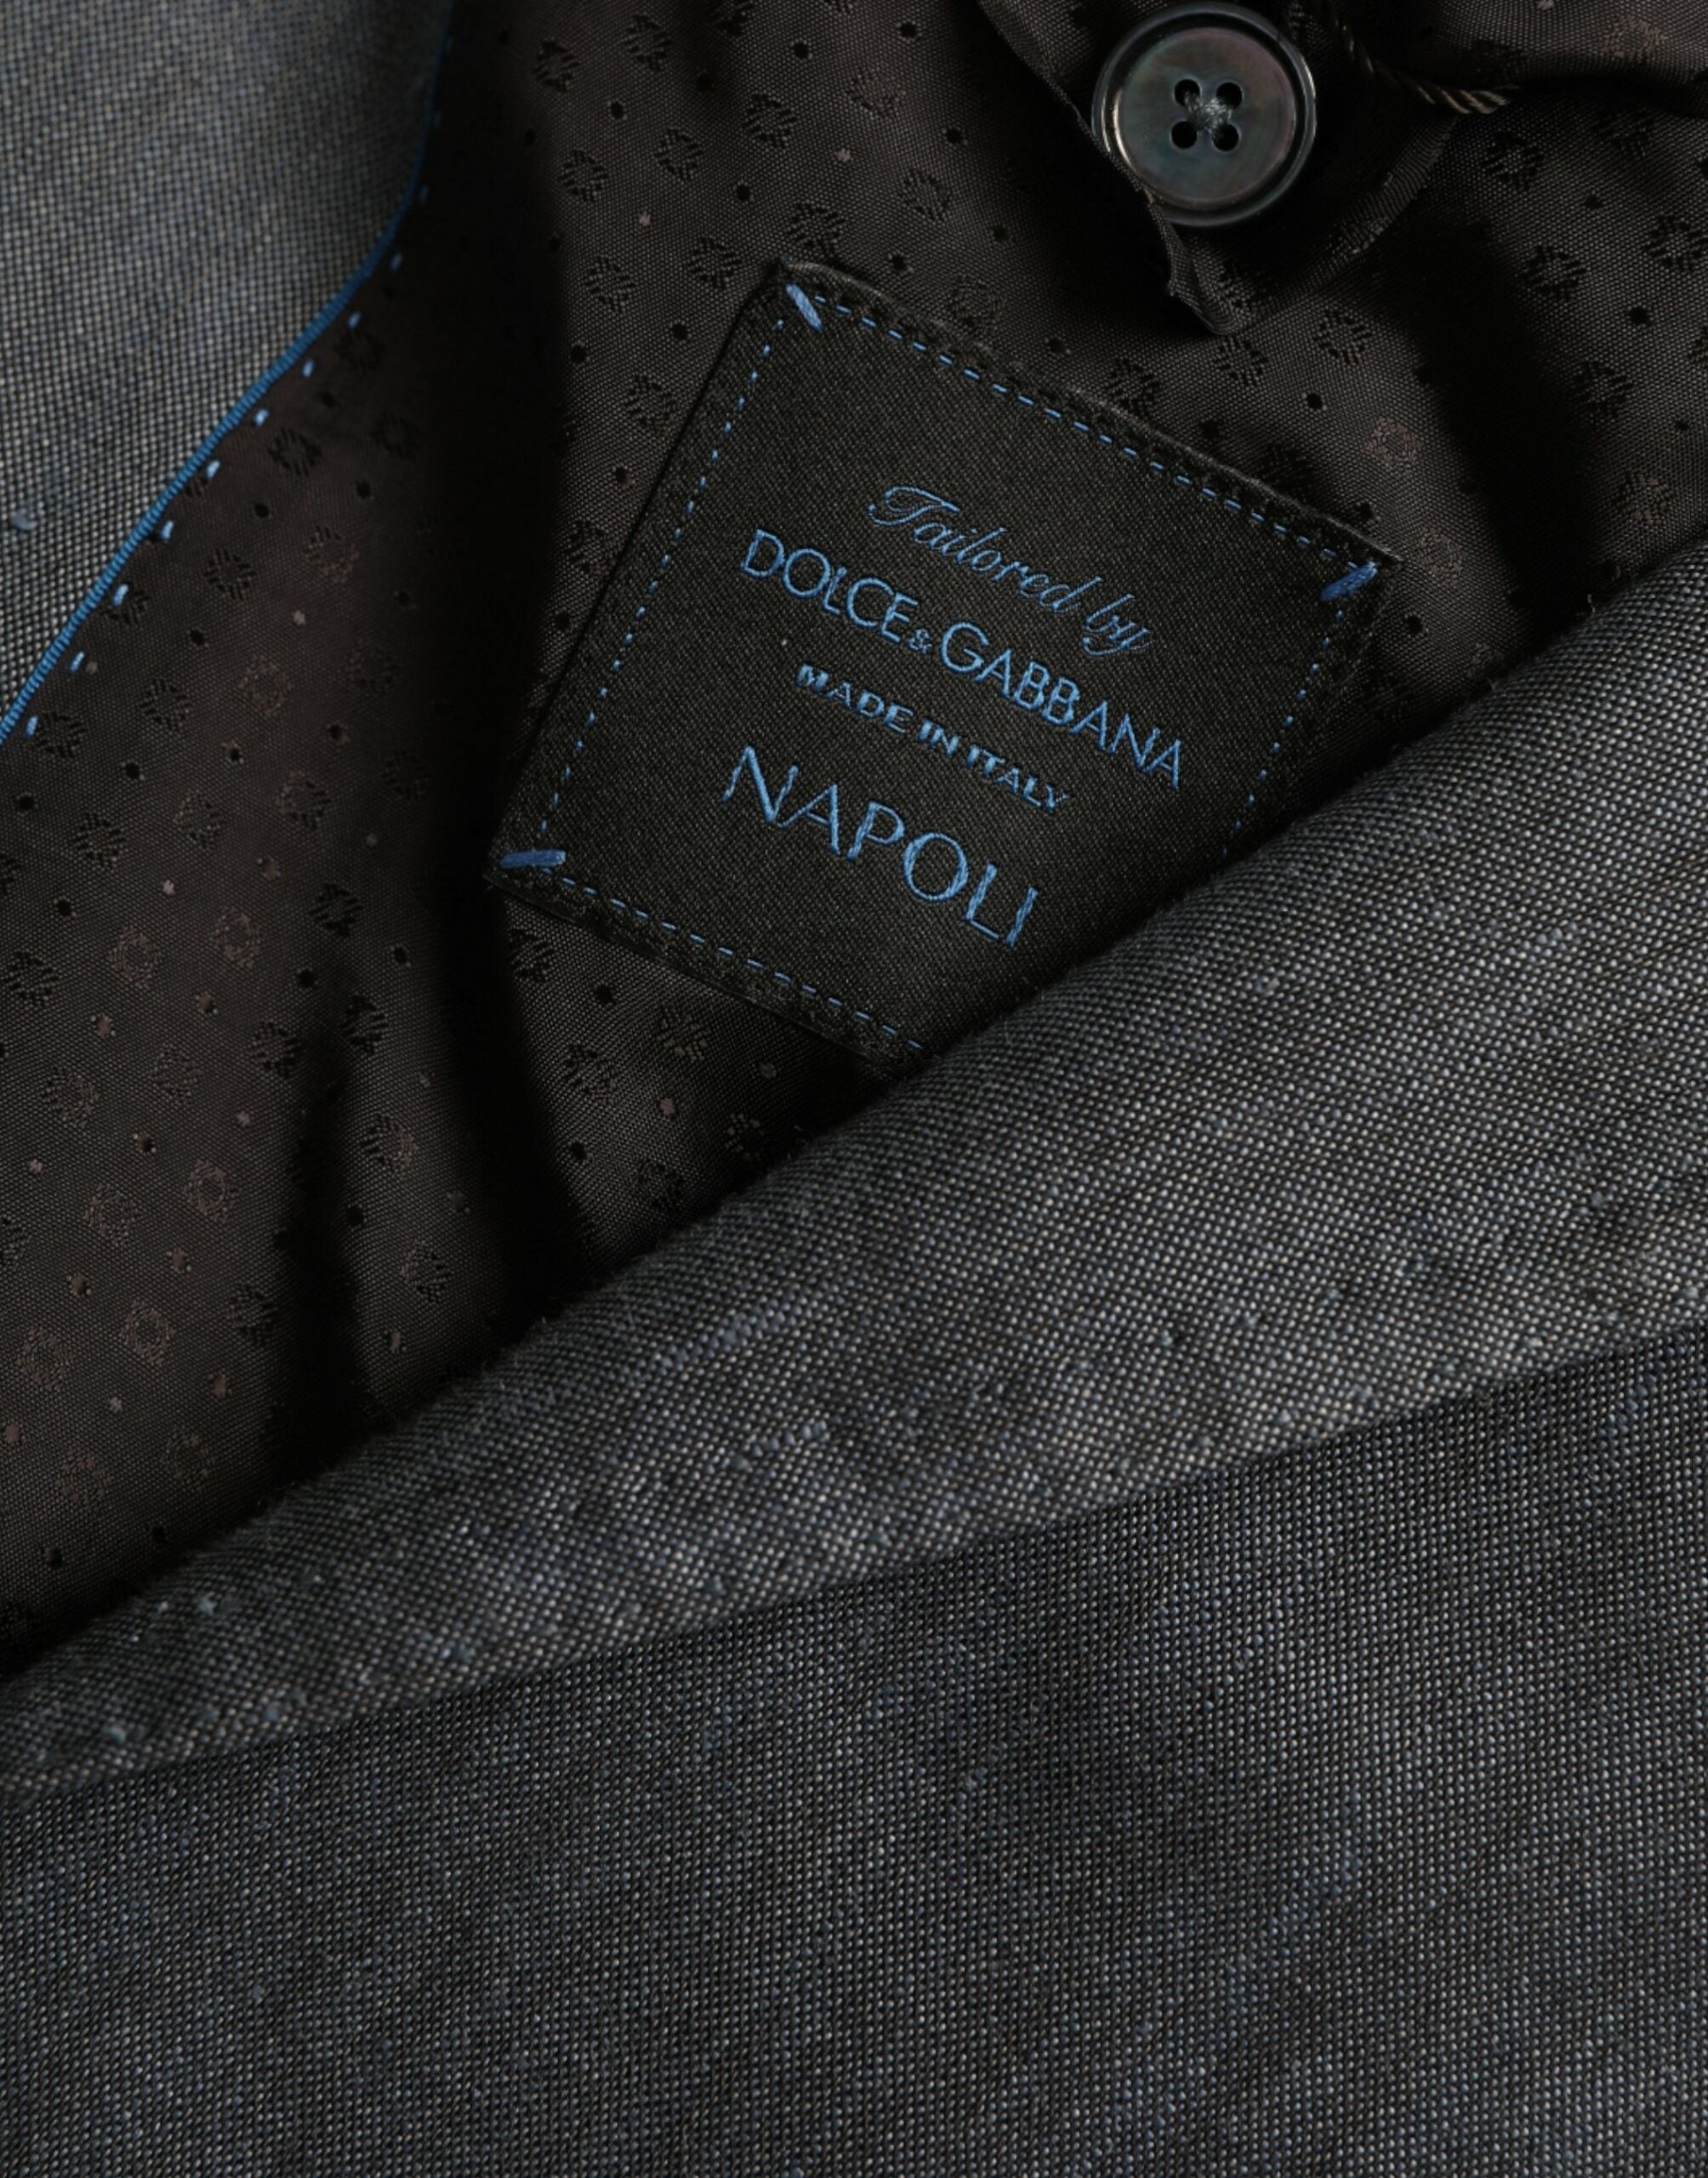 Dolce & Gabbana Blue Linen NAPOLI Single Breasted Coat Blazer